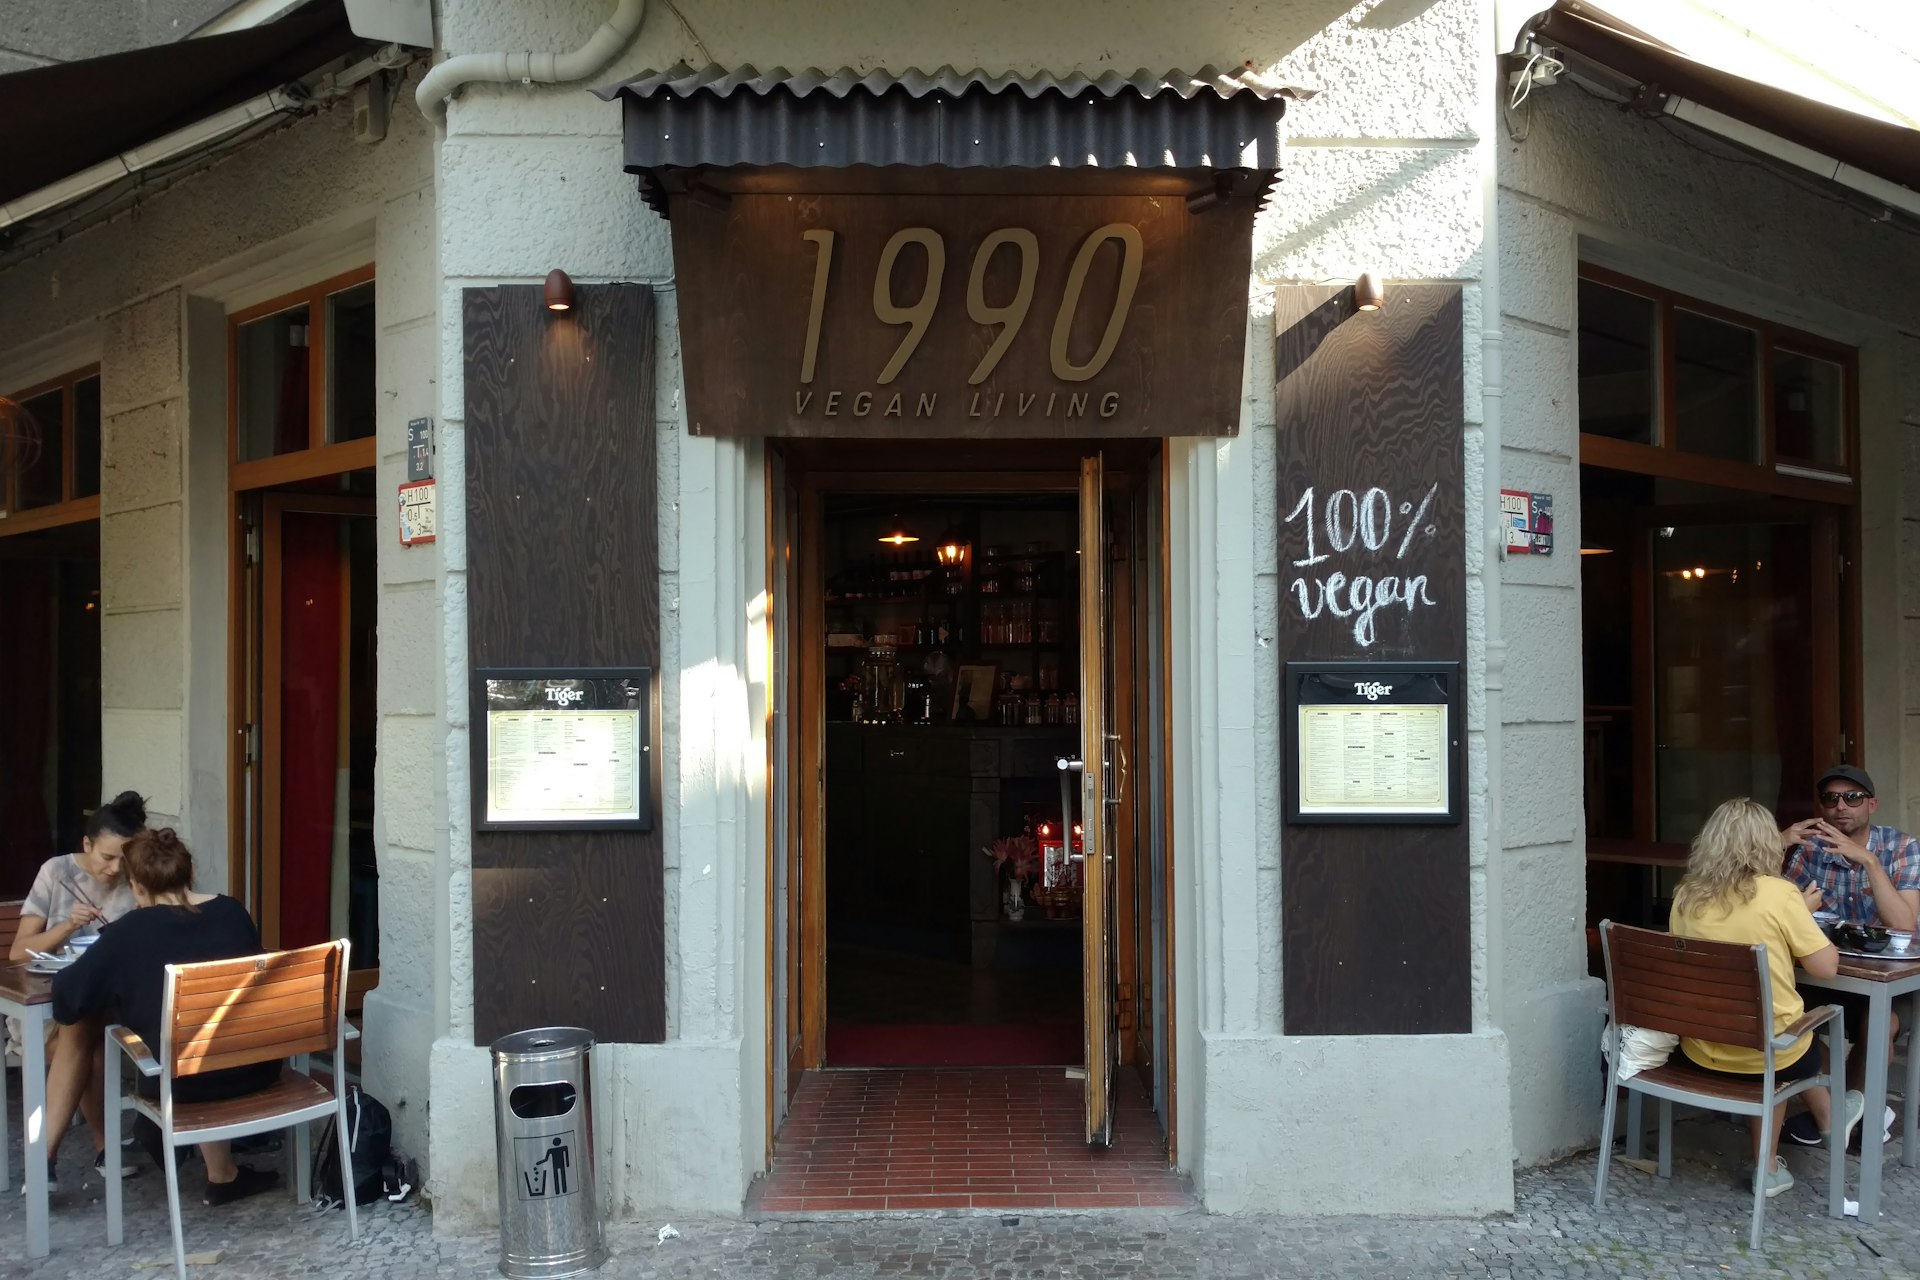 Berlin's best vegan - the exterior of 100% vegan cafe, 1990 Vegan, in Friedrichshain, Berlin